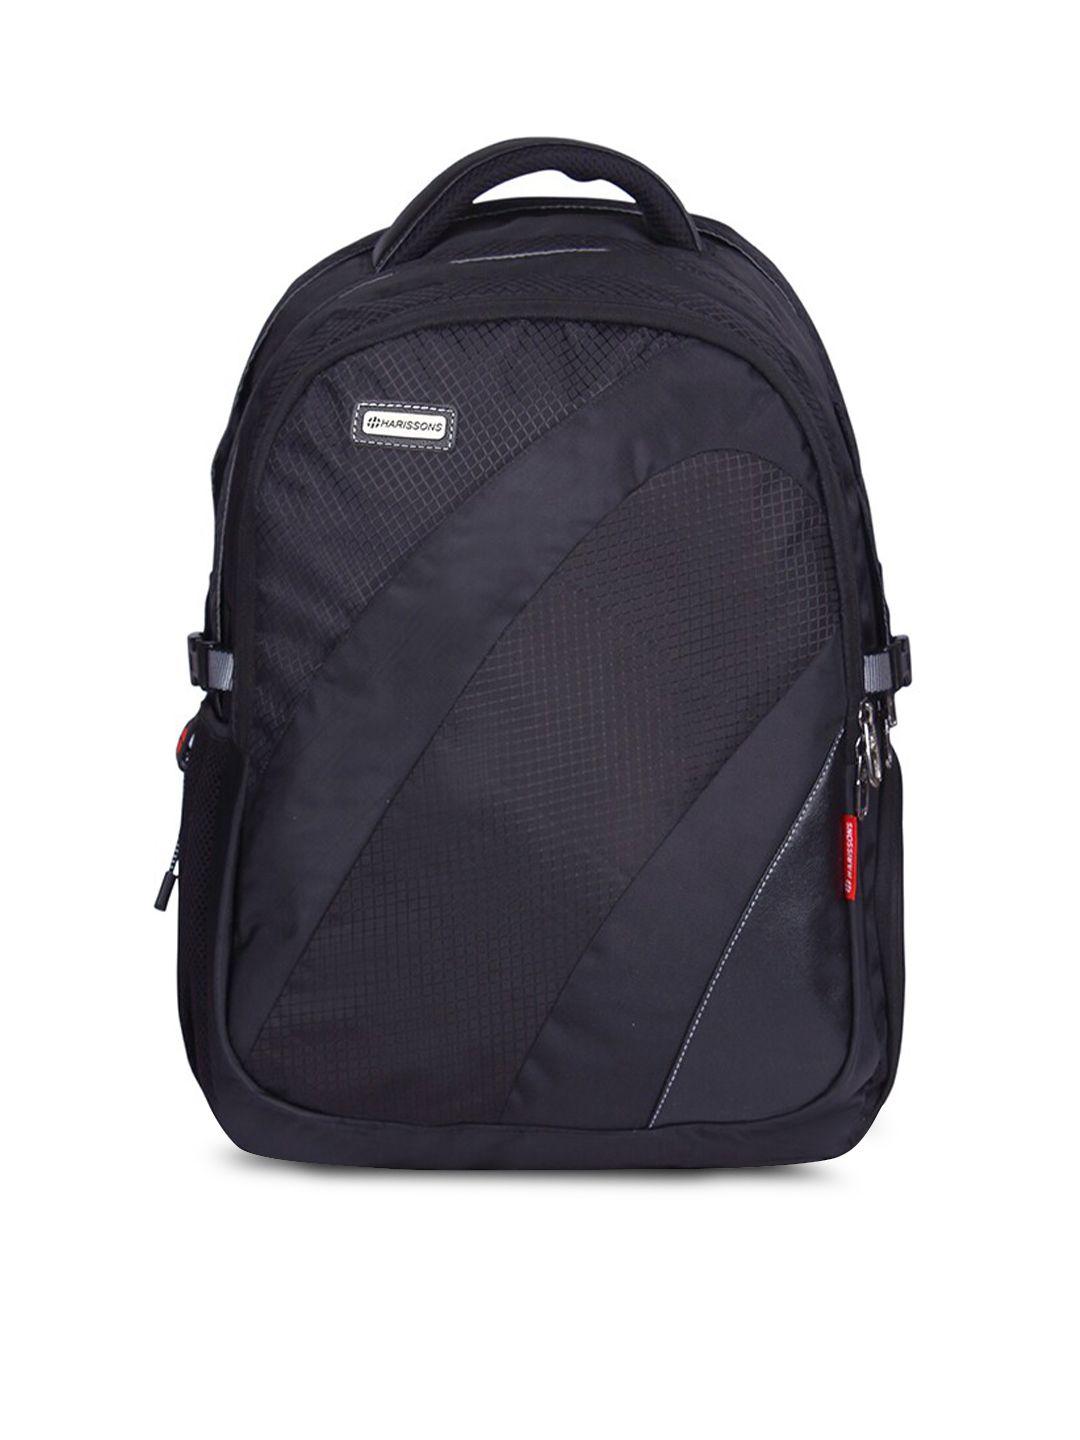 harissons black 15 inch laptop backpack